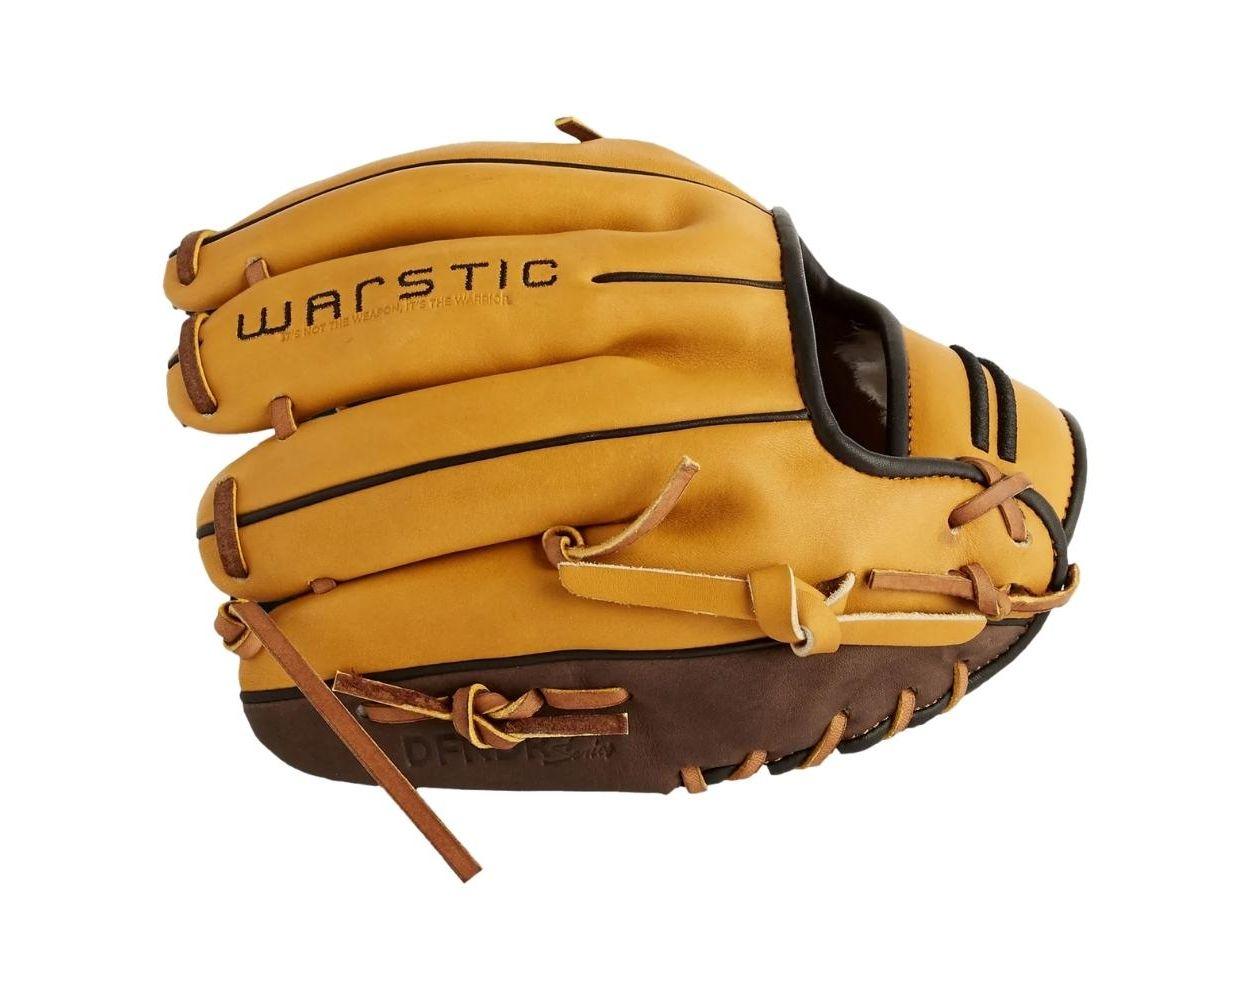 Warstic IK3 Ian Kinsler Wild Horse 12.75 Outfield Baseball Glove